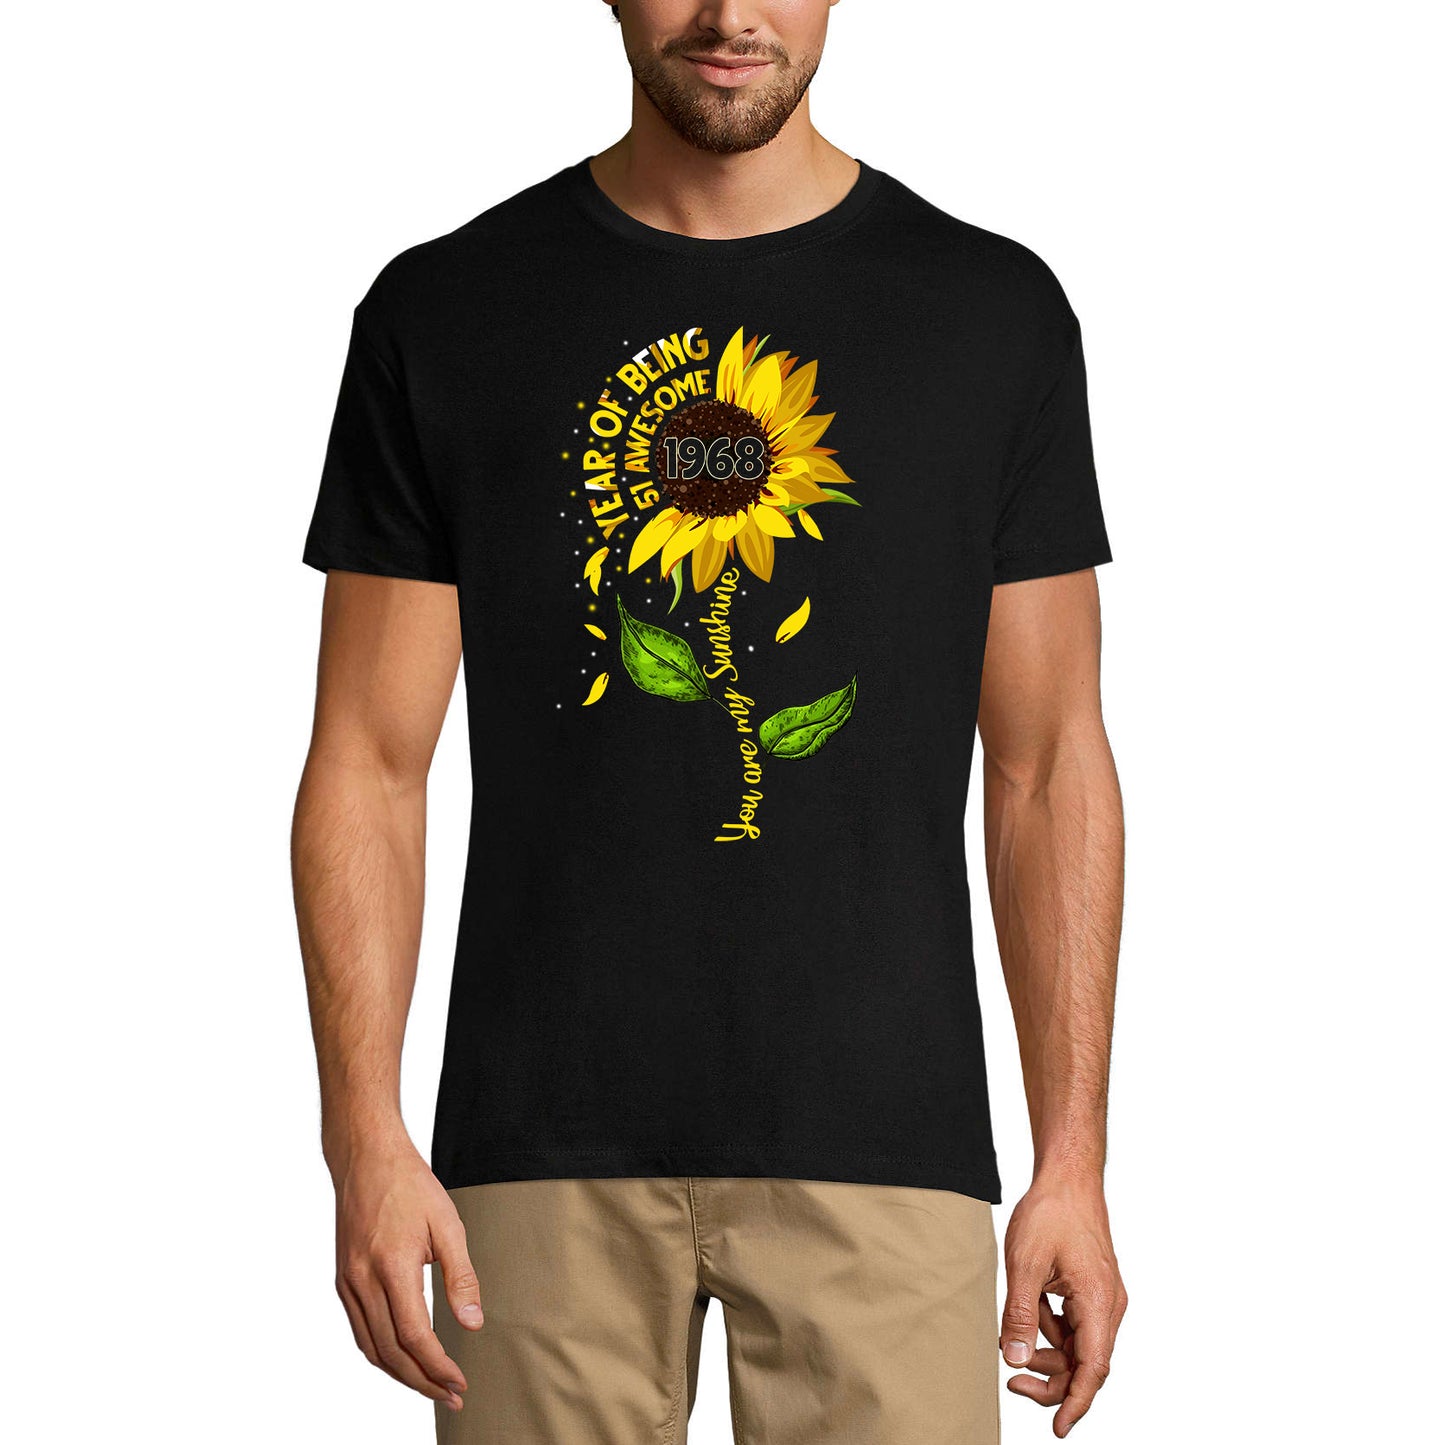 ULTRABASIC Men's T-Shirt Year of Being Awesome 1968 - Sunflower Sunshine 53rd Birthday Gift Tee Shirt